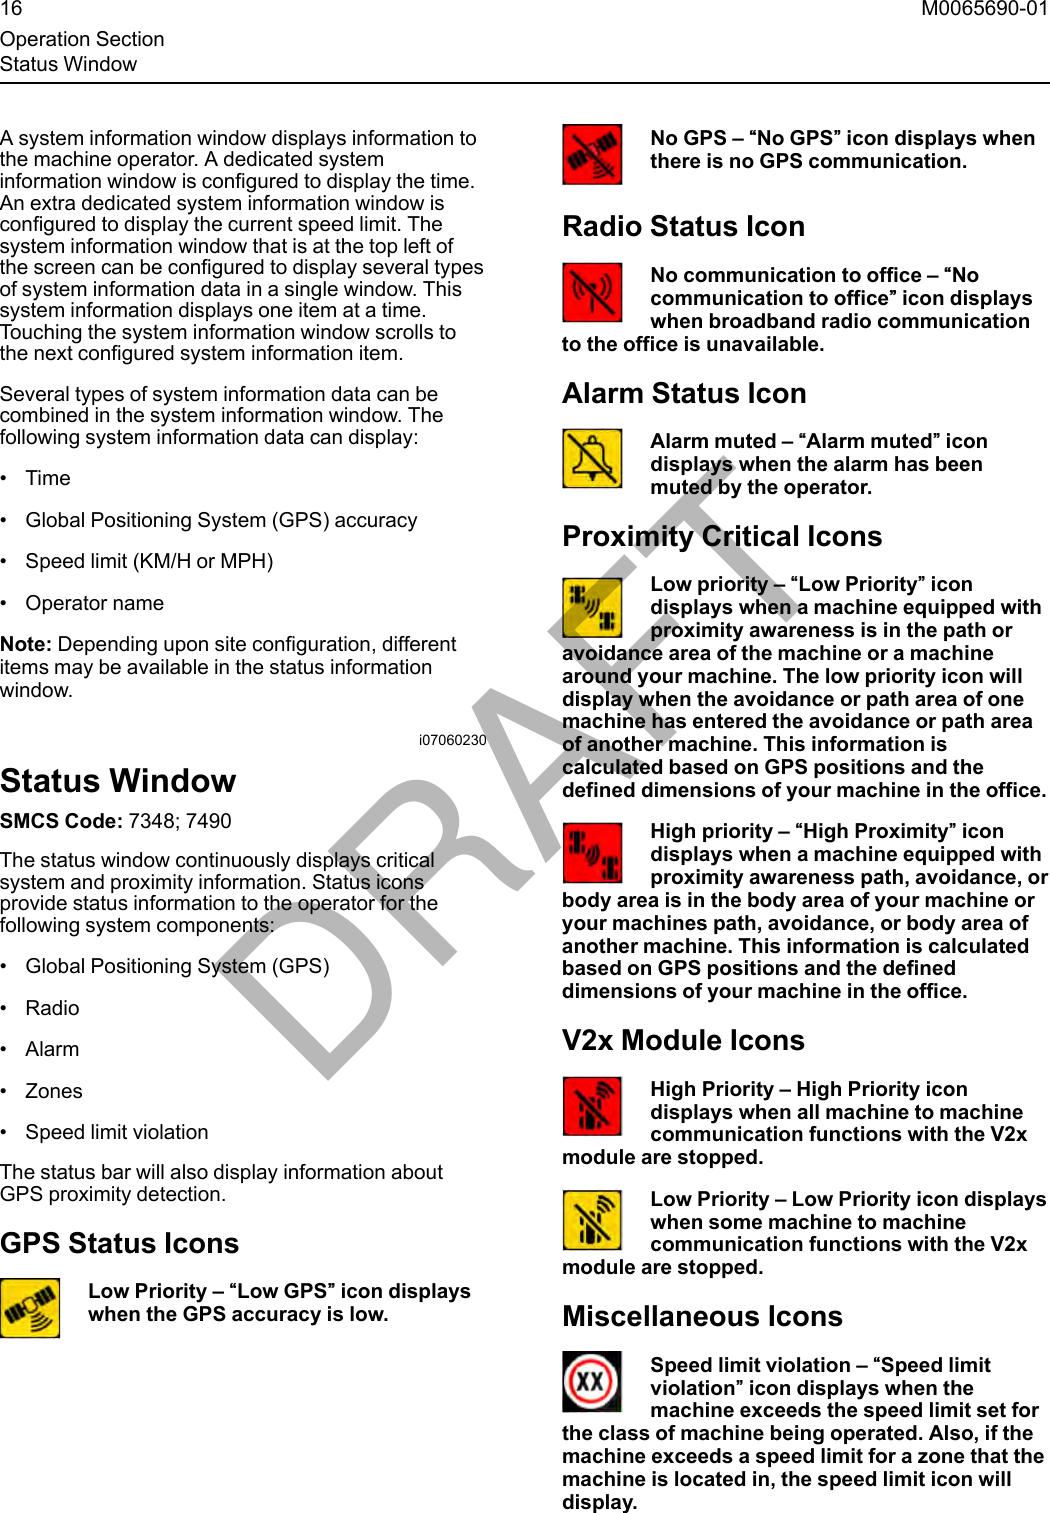 Page 16 of Caterpillar PL671 Digital Transmission System User Manual 